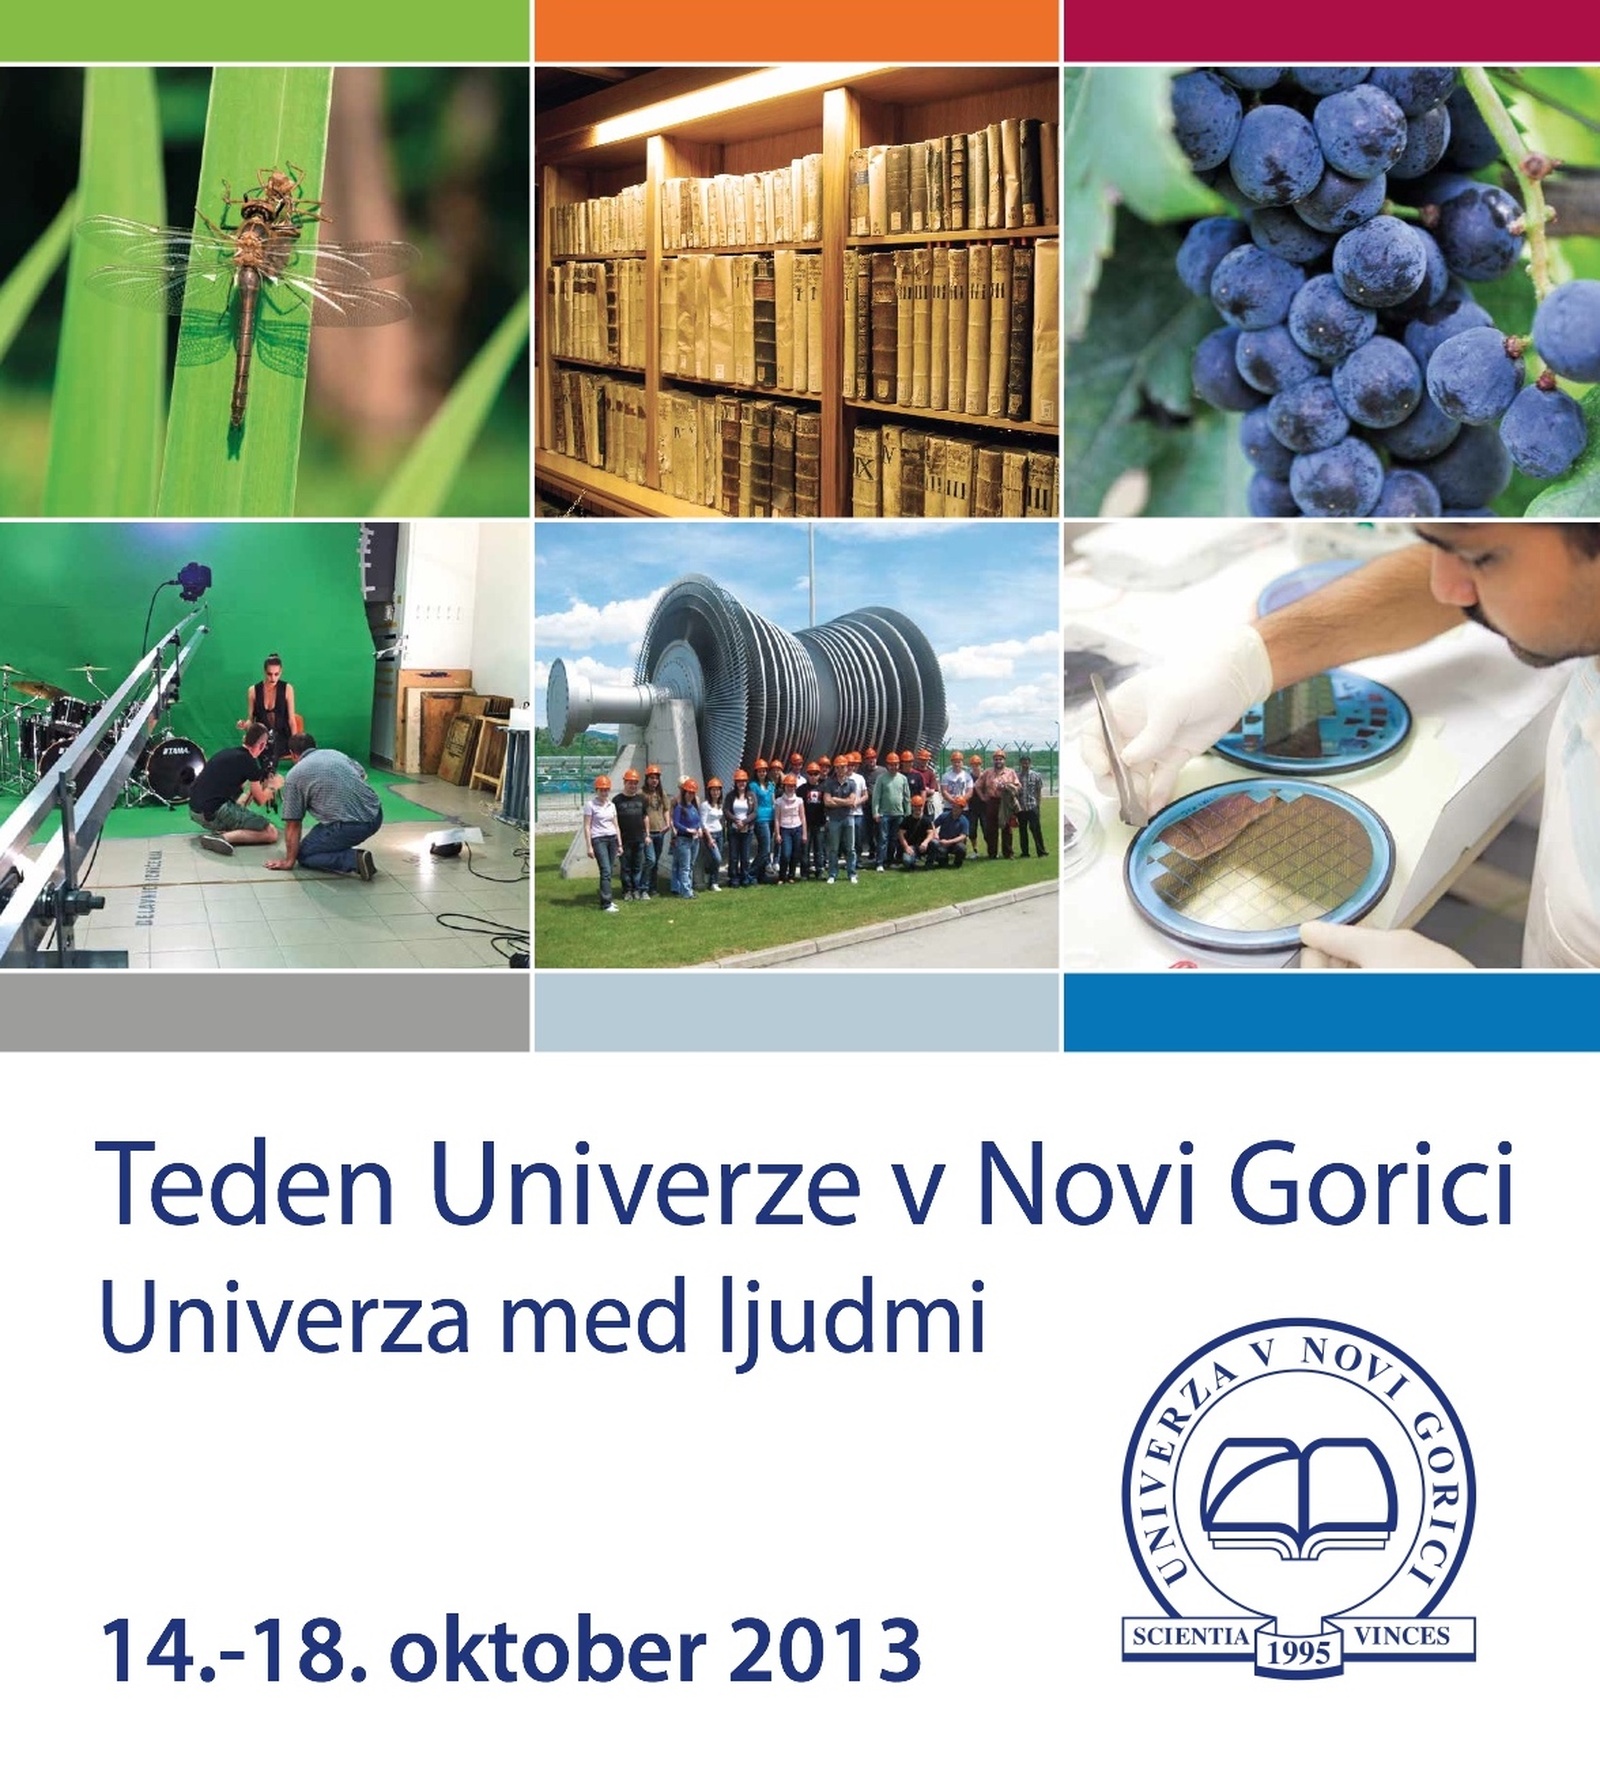 University of Nova Gorica Week